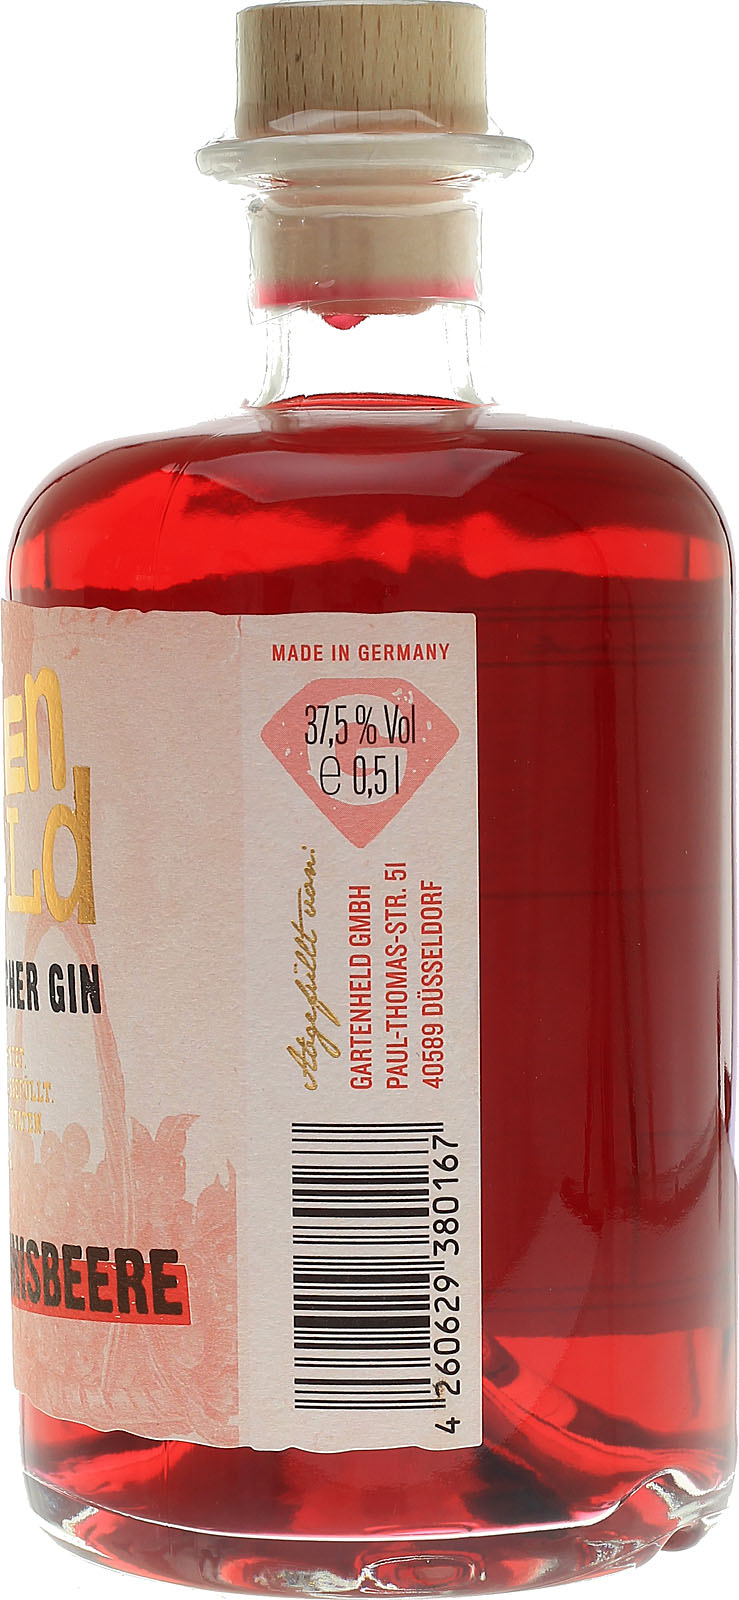 Gartenheld Botanischer Gin Johannisbeere 0,5 Liter - Be